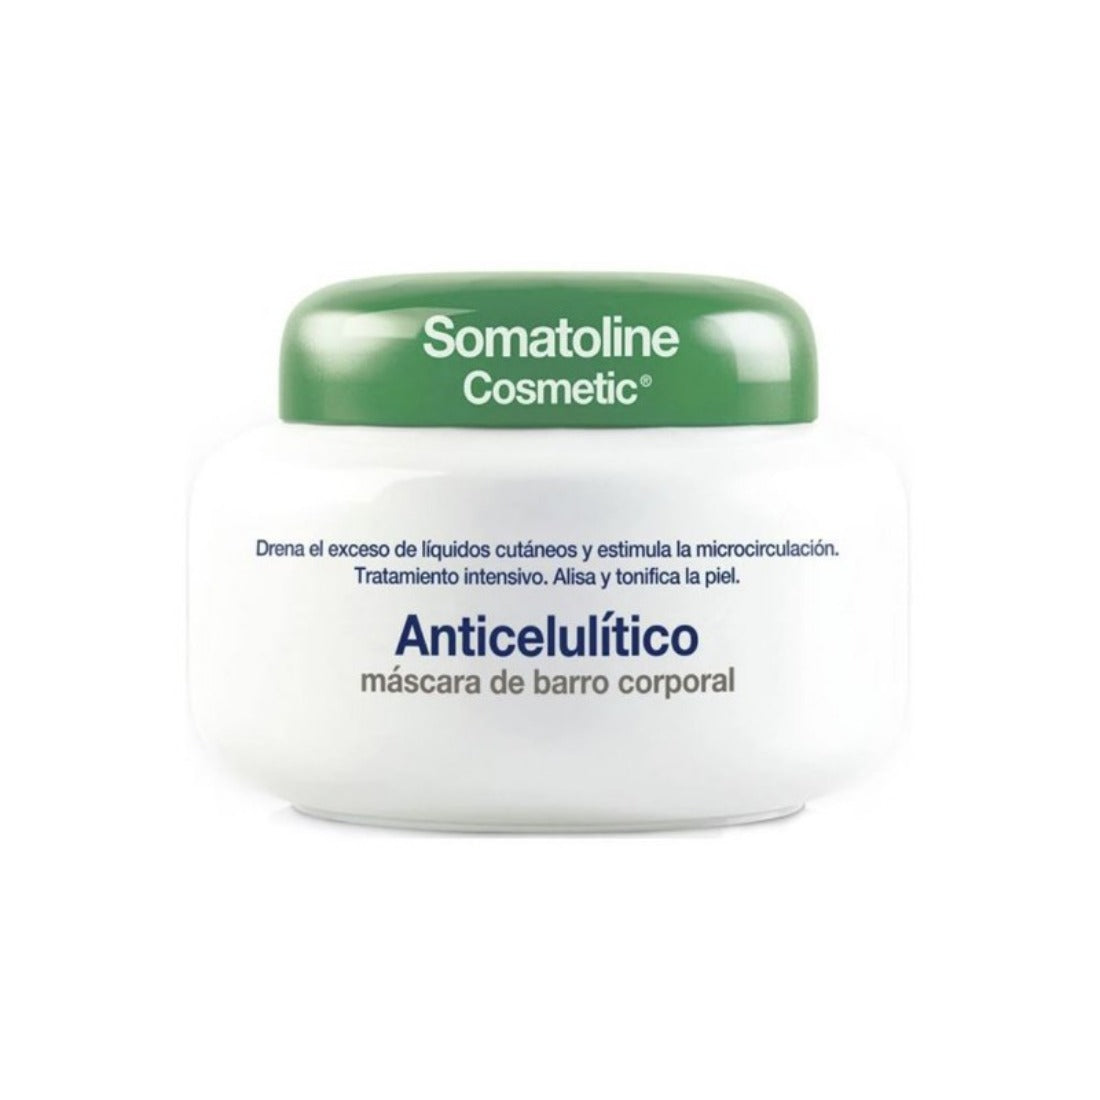 Somatoline Cosmetic Anticelulítico máscara de barro 500 g